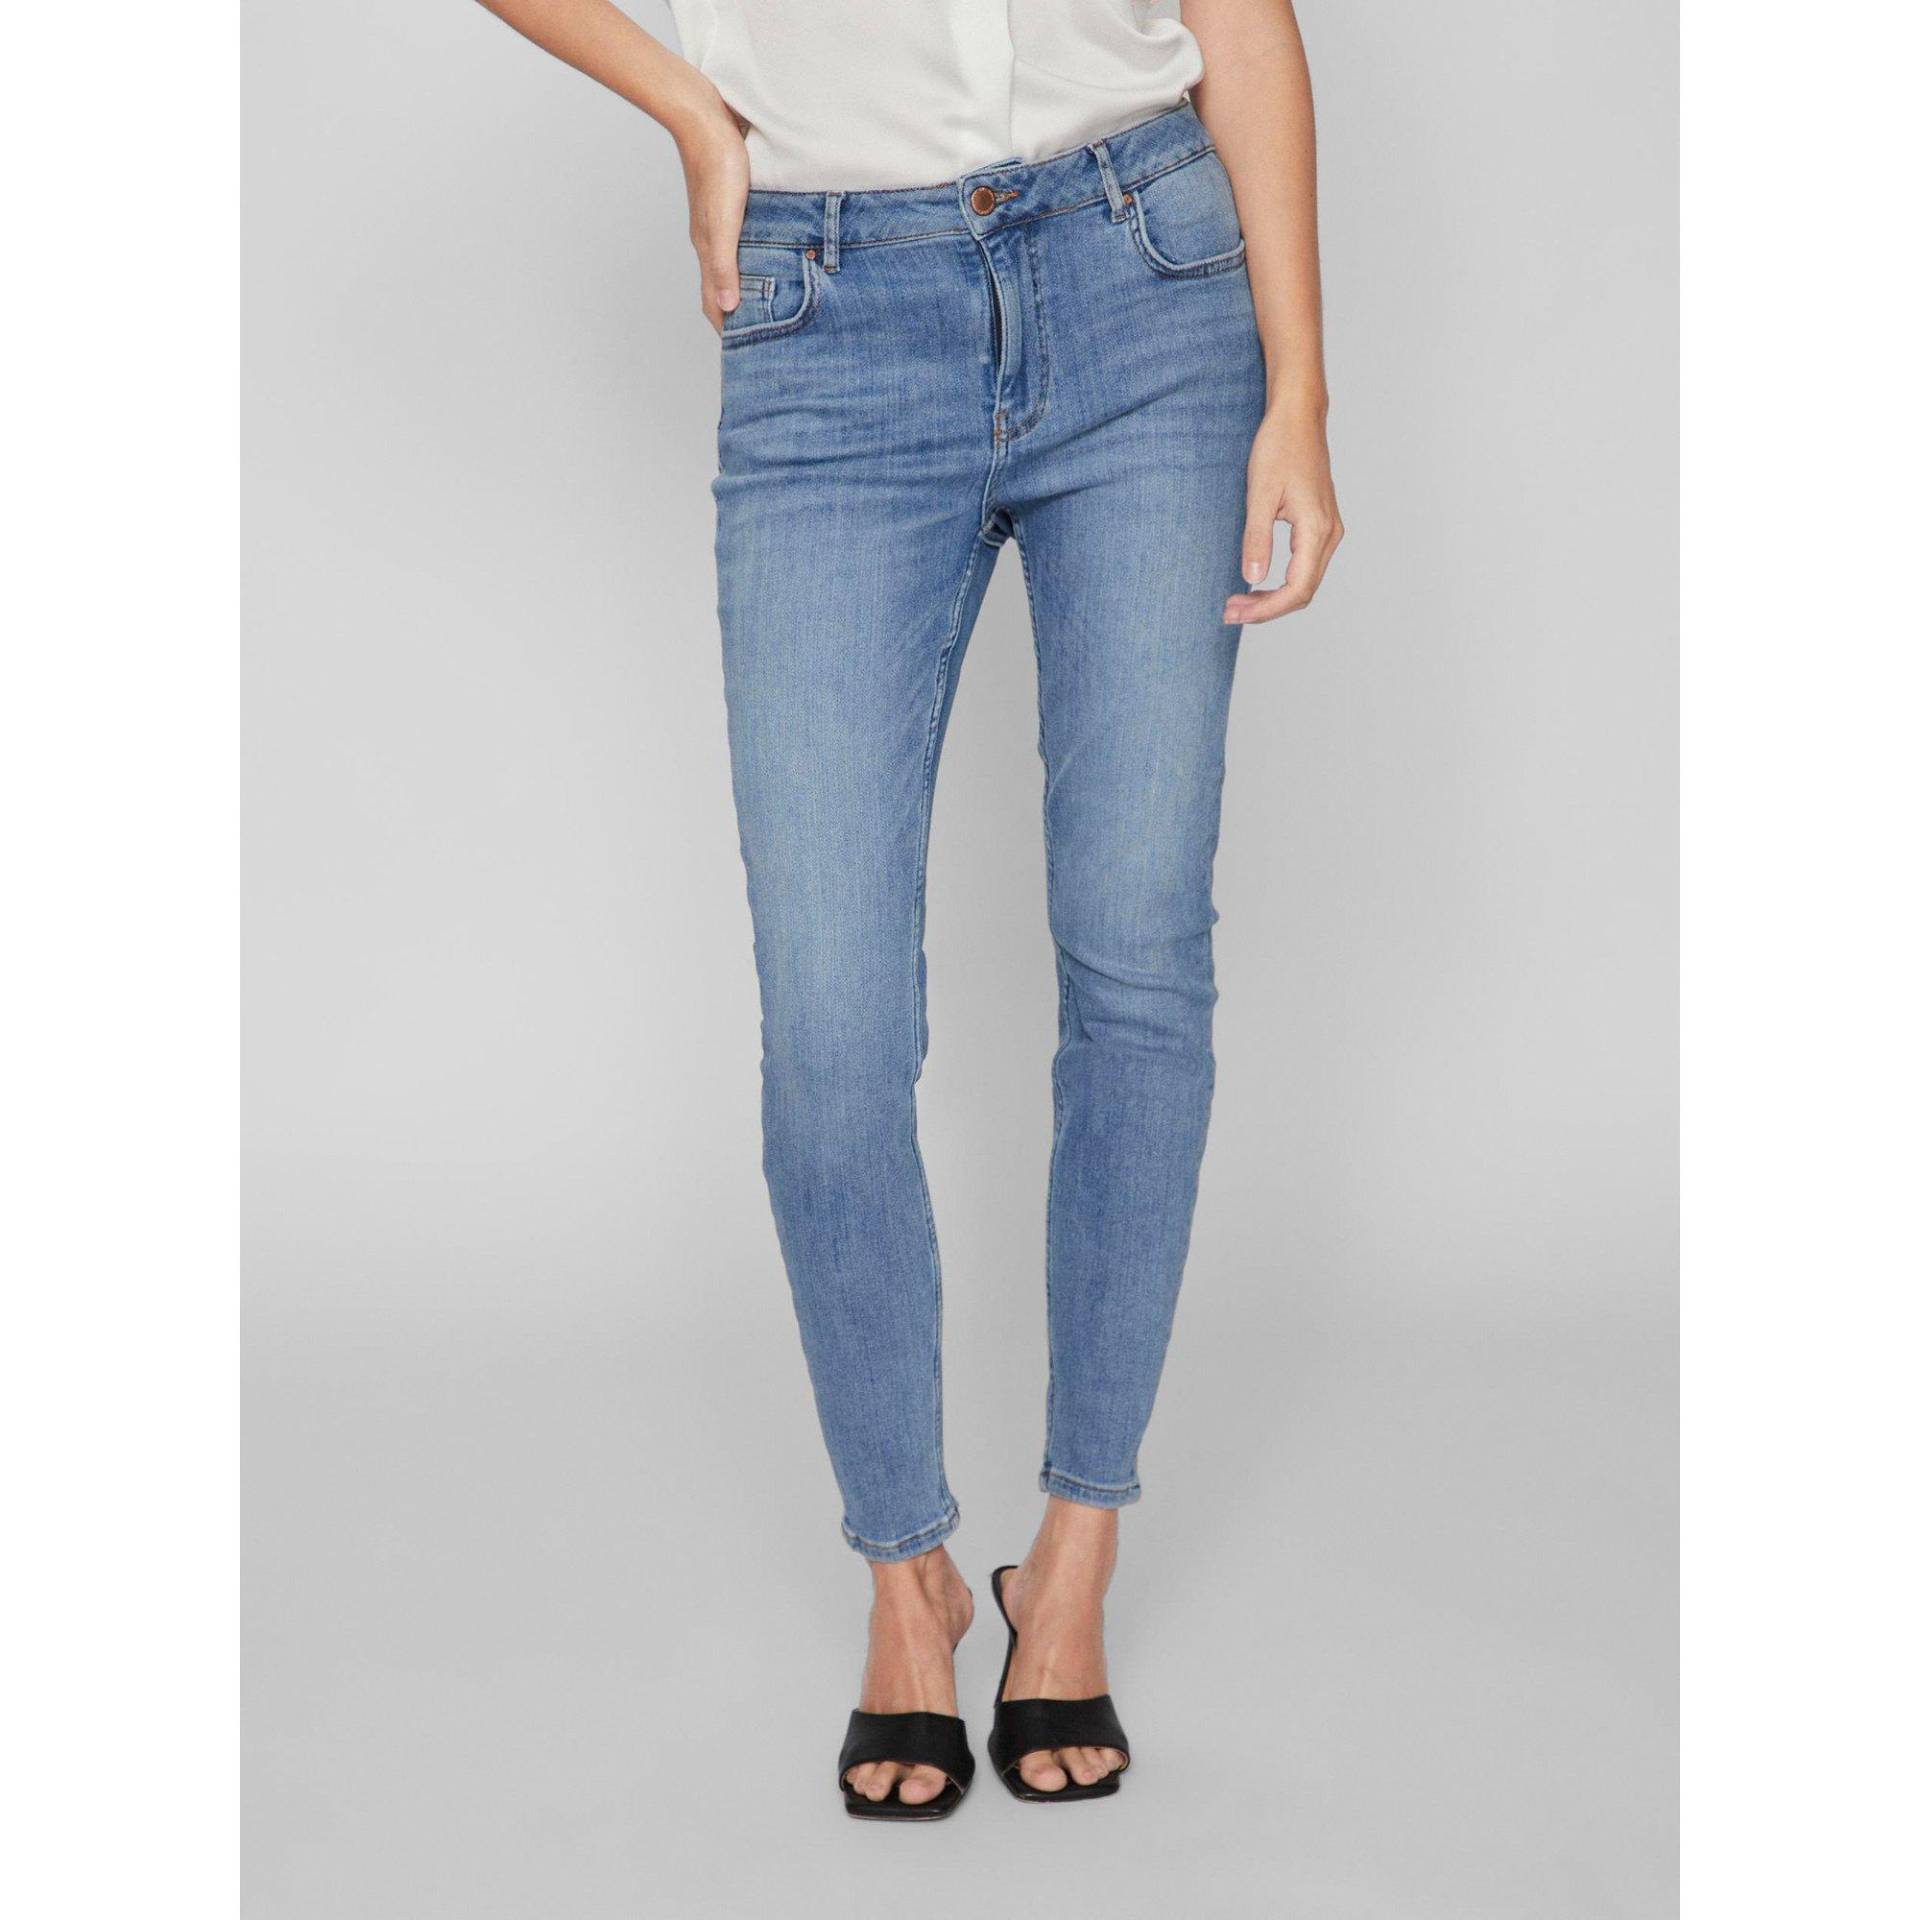 Jeans, Skinny Fit Damen Blau Denim XL von VILA